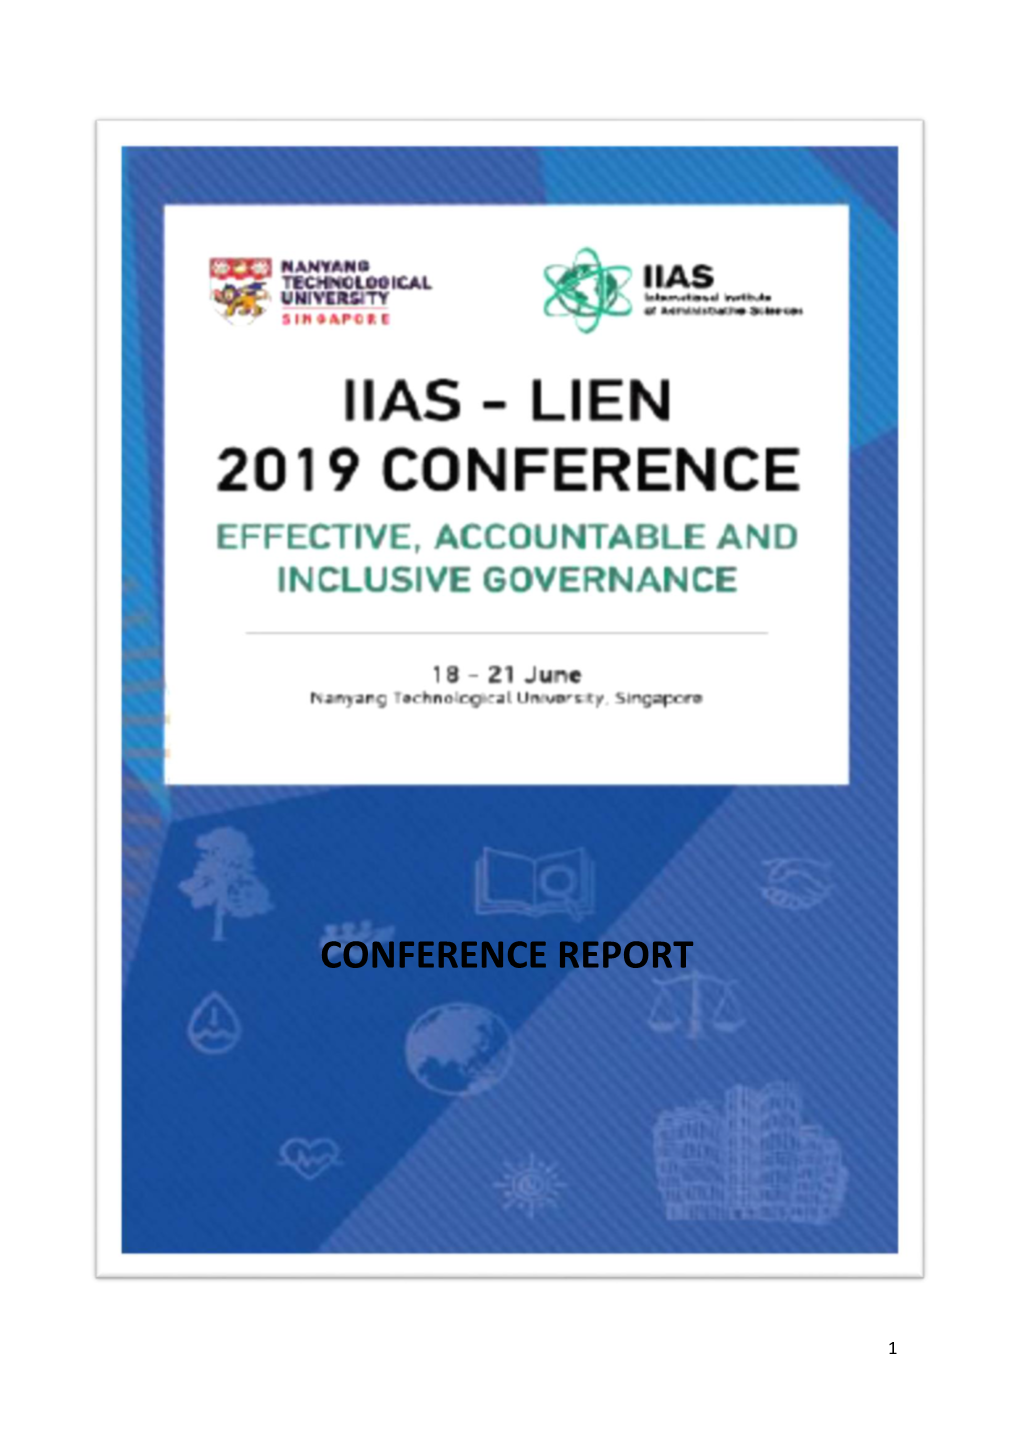 IIAS-LIEN 2019 CONFERENCE Executive Summary